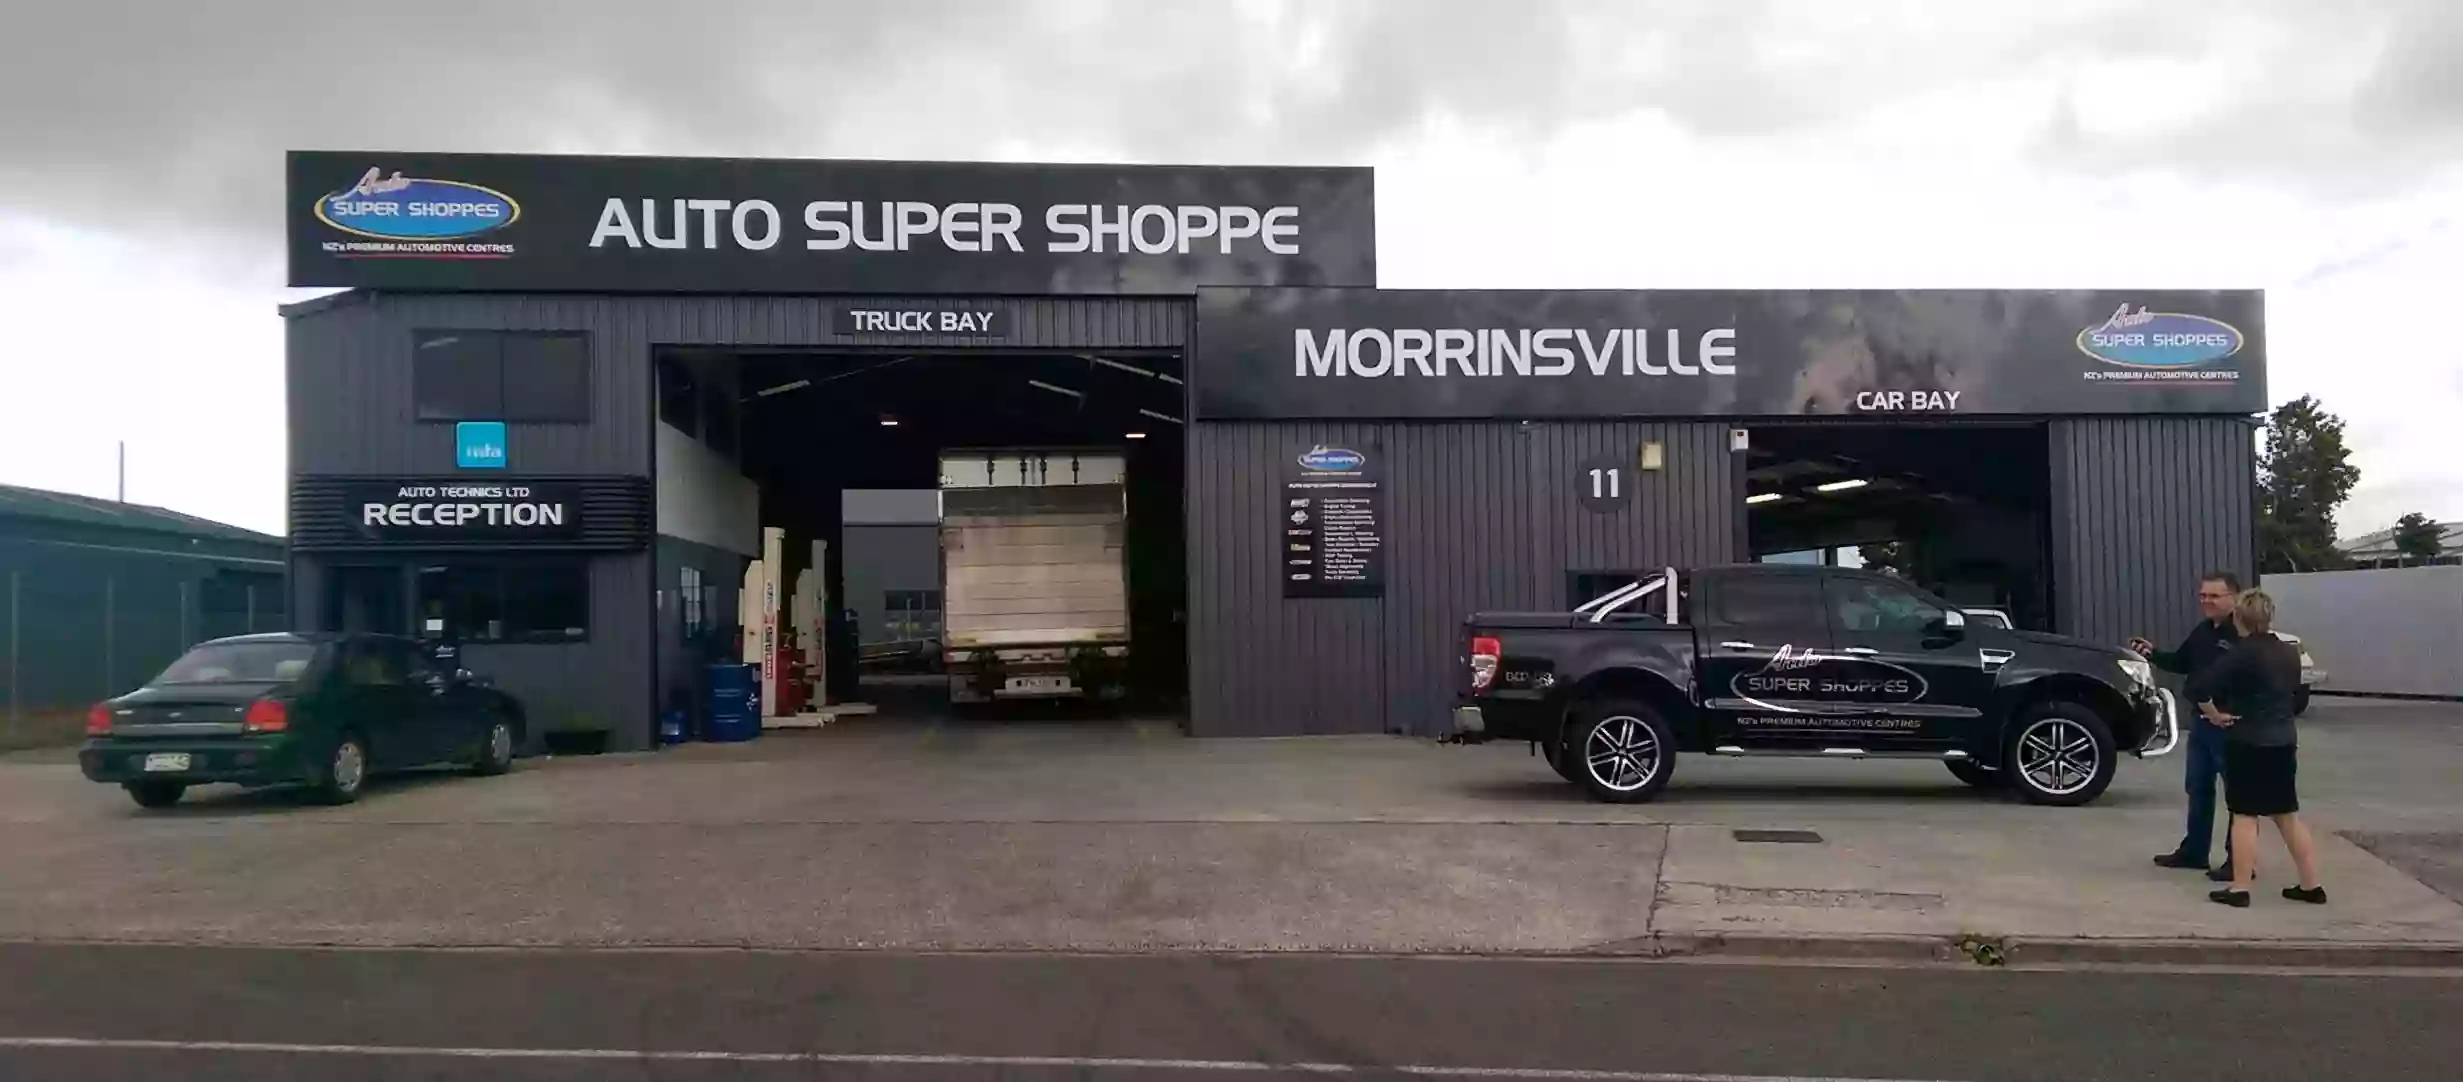 Auto Super Shoppe Morrinsville